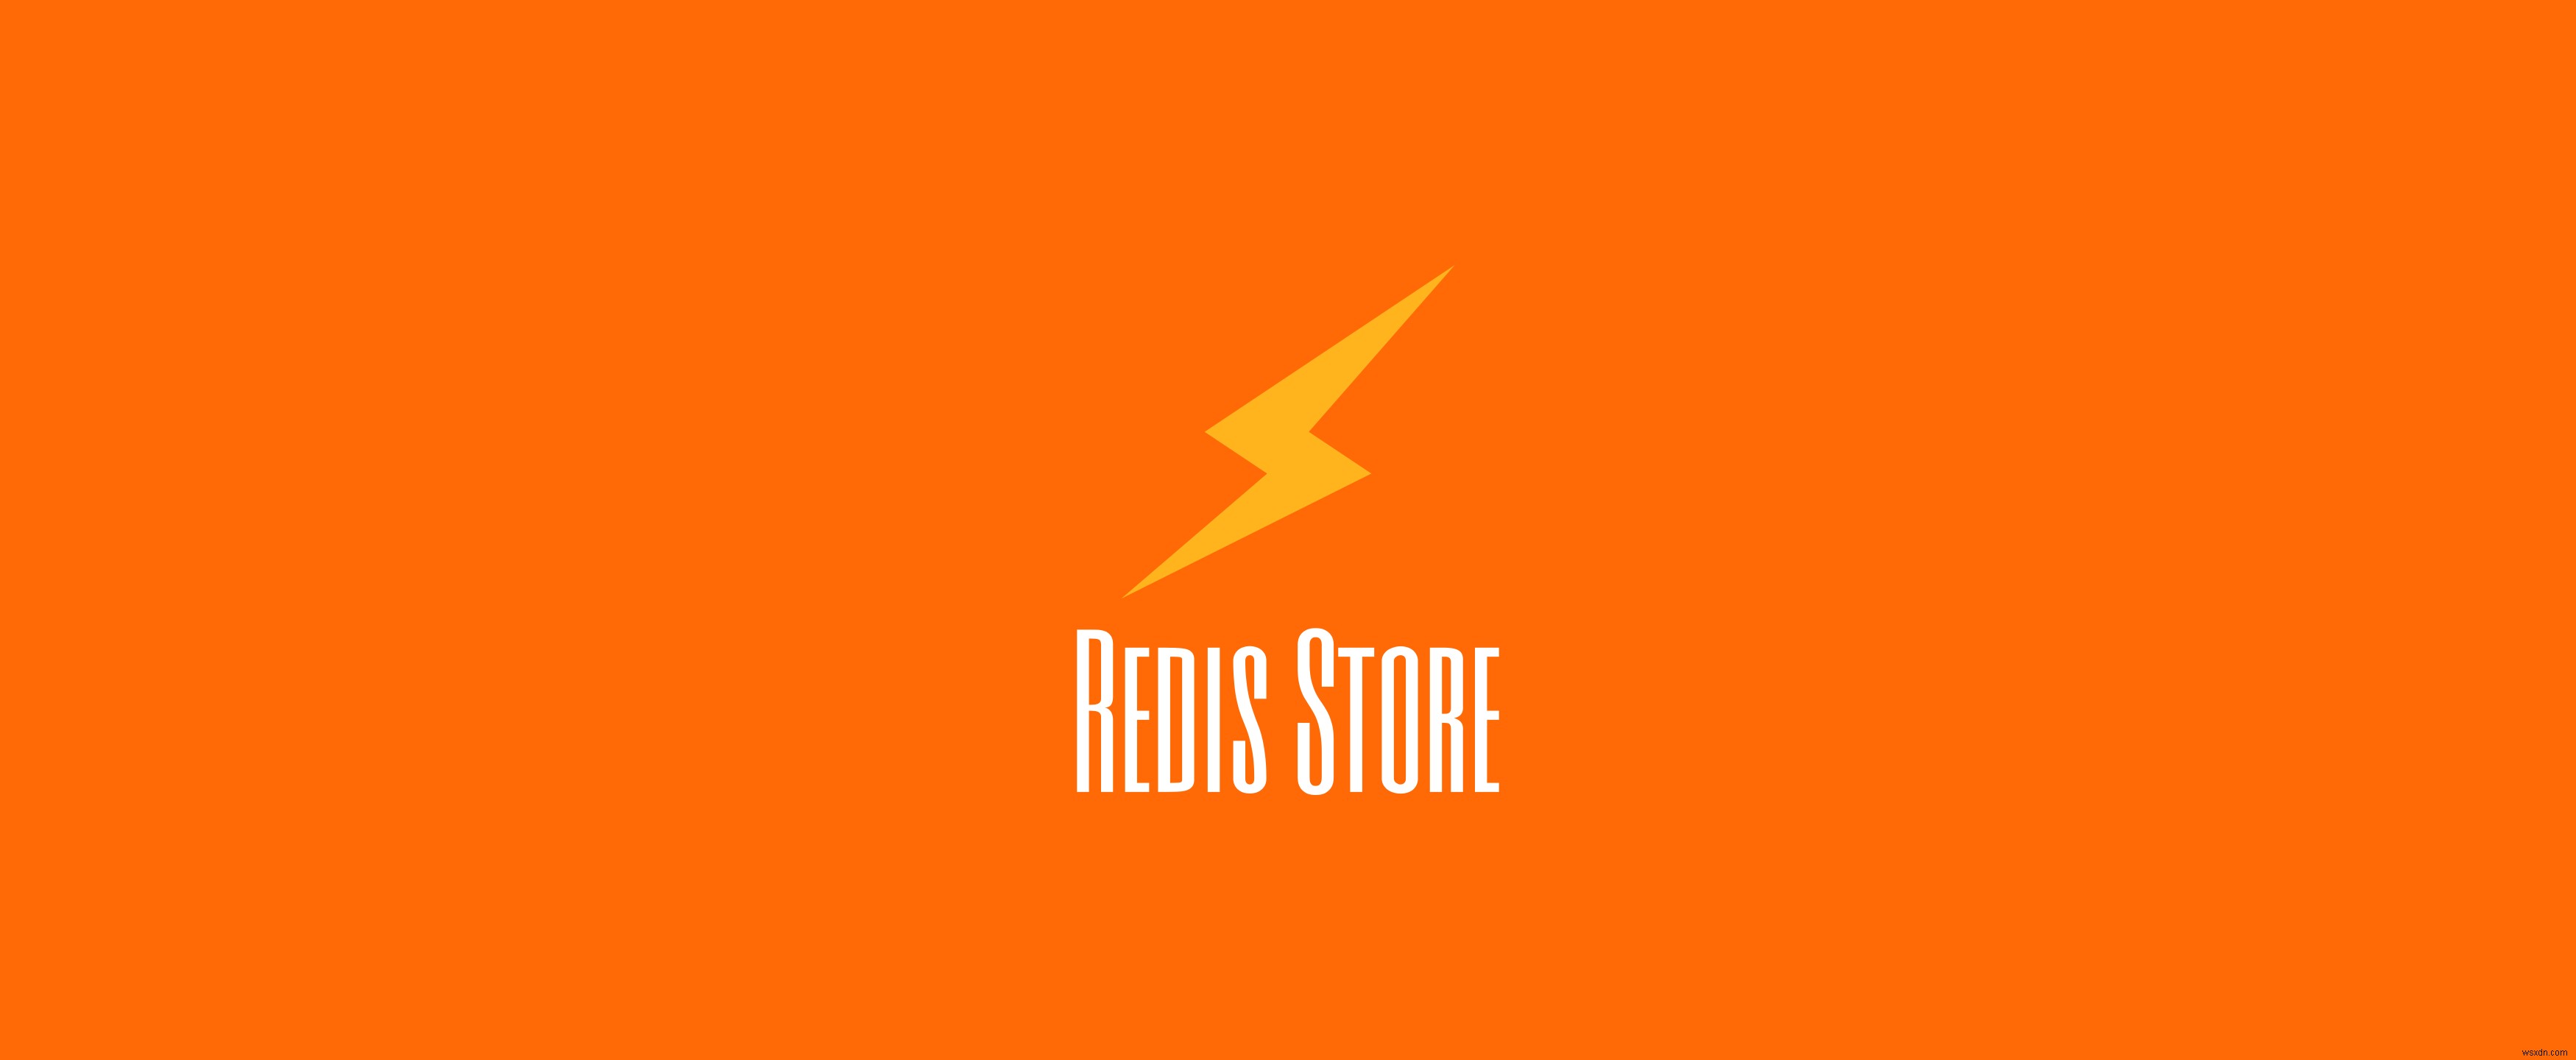 $100K  Build on Redis  হ্যাকাথন বিজয়ীদের ঘোষণা! 